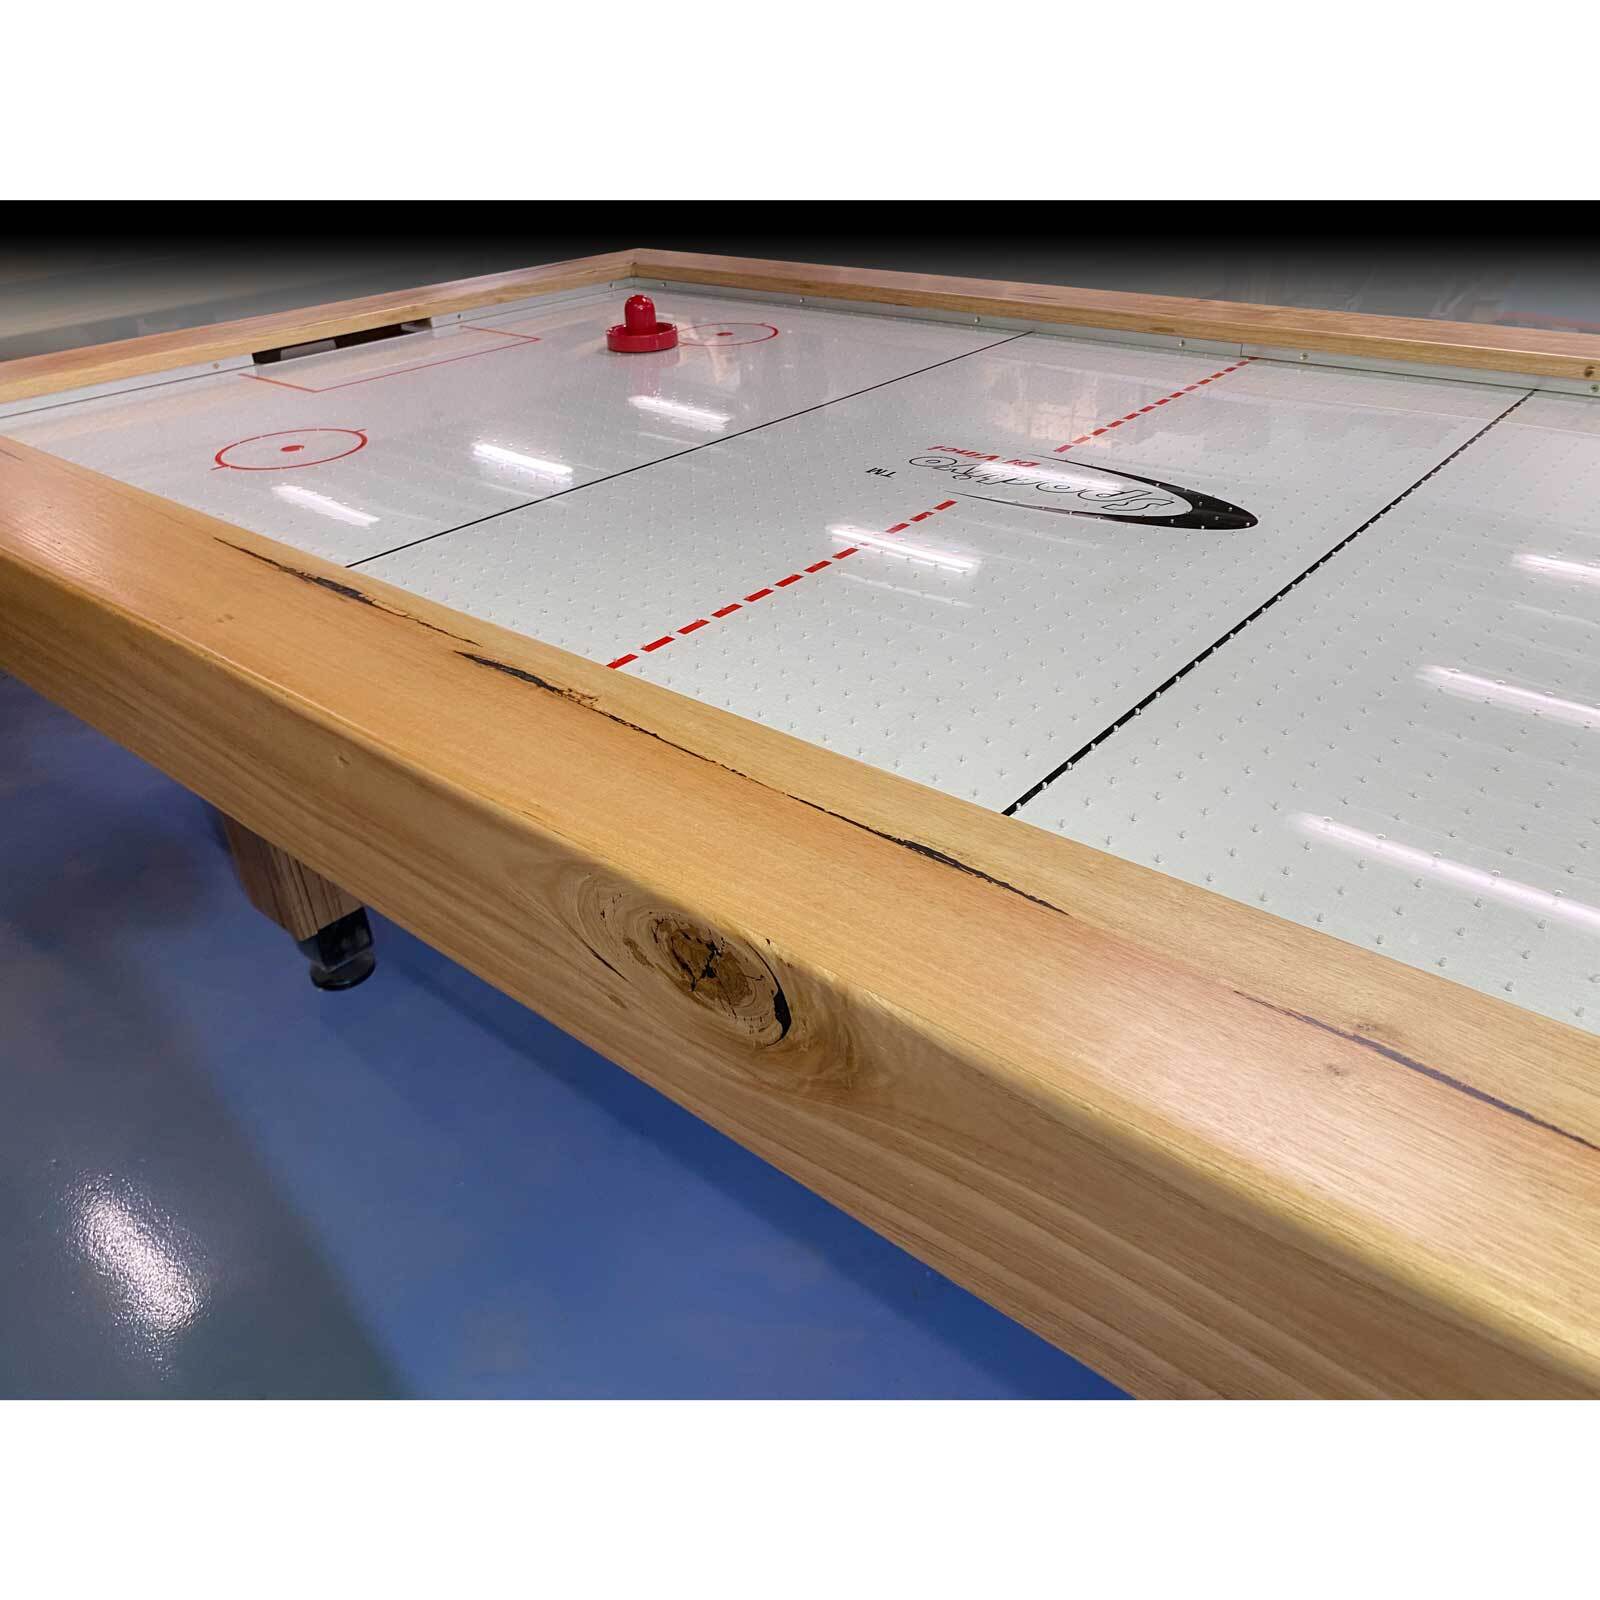 8ft regent Air Hockey Table - PVC base (no LED installed)